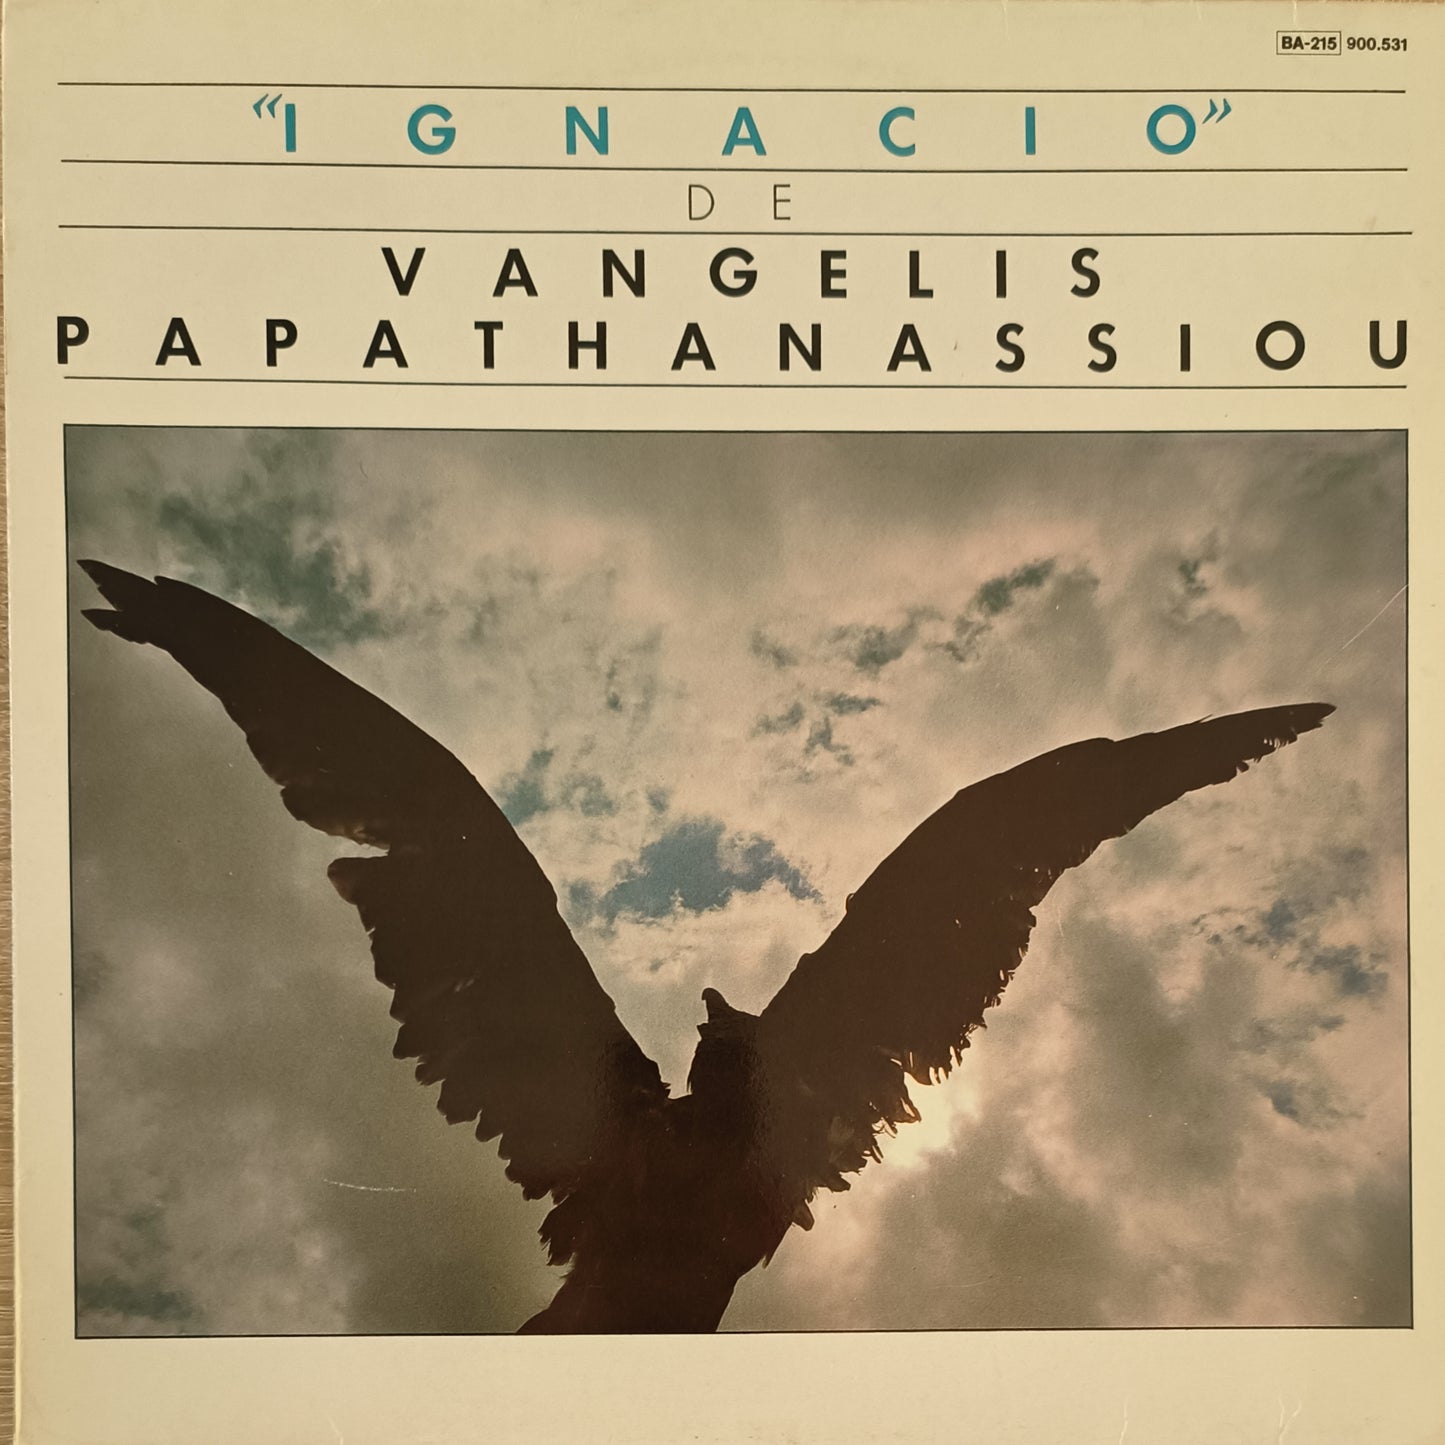 VANGELIS PAPATHANASSIOU - Ignacio